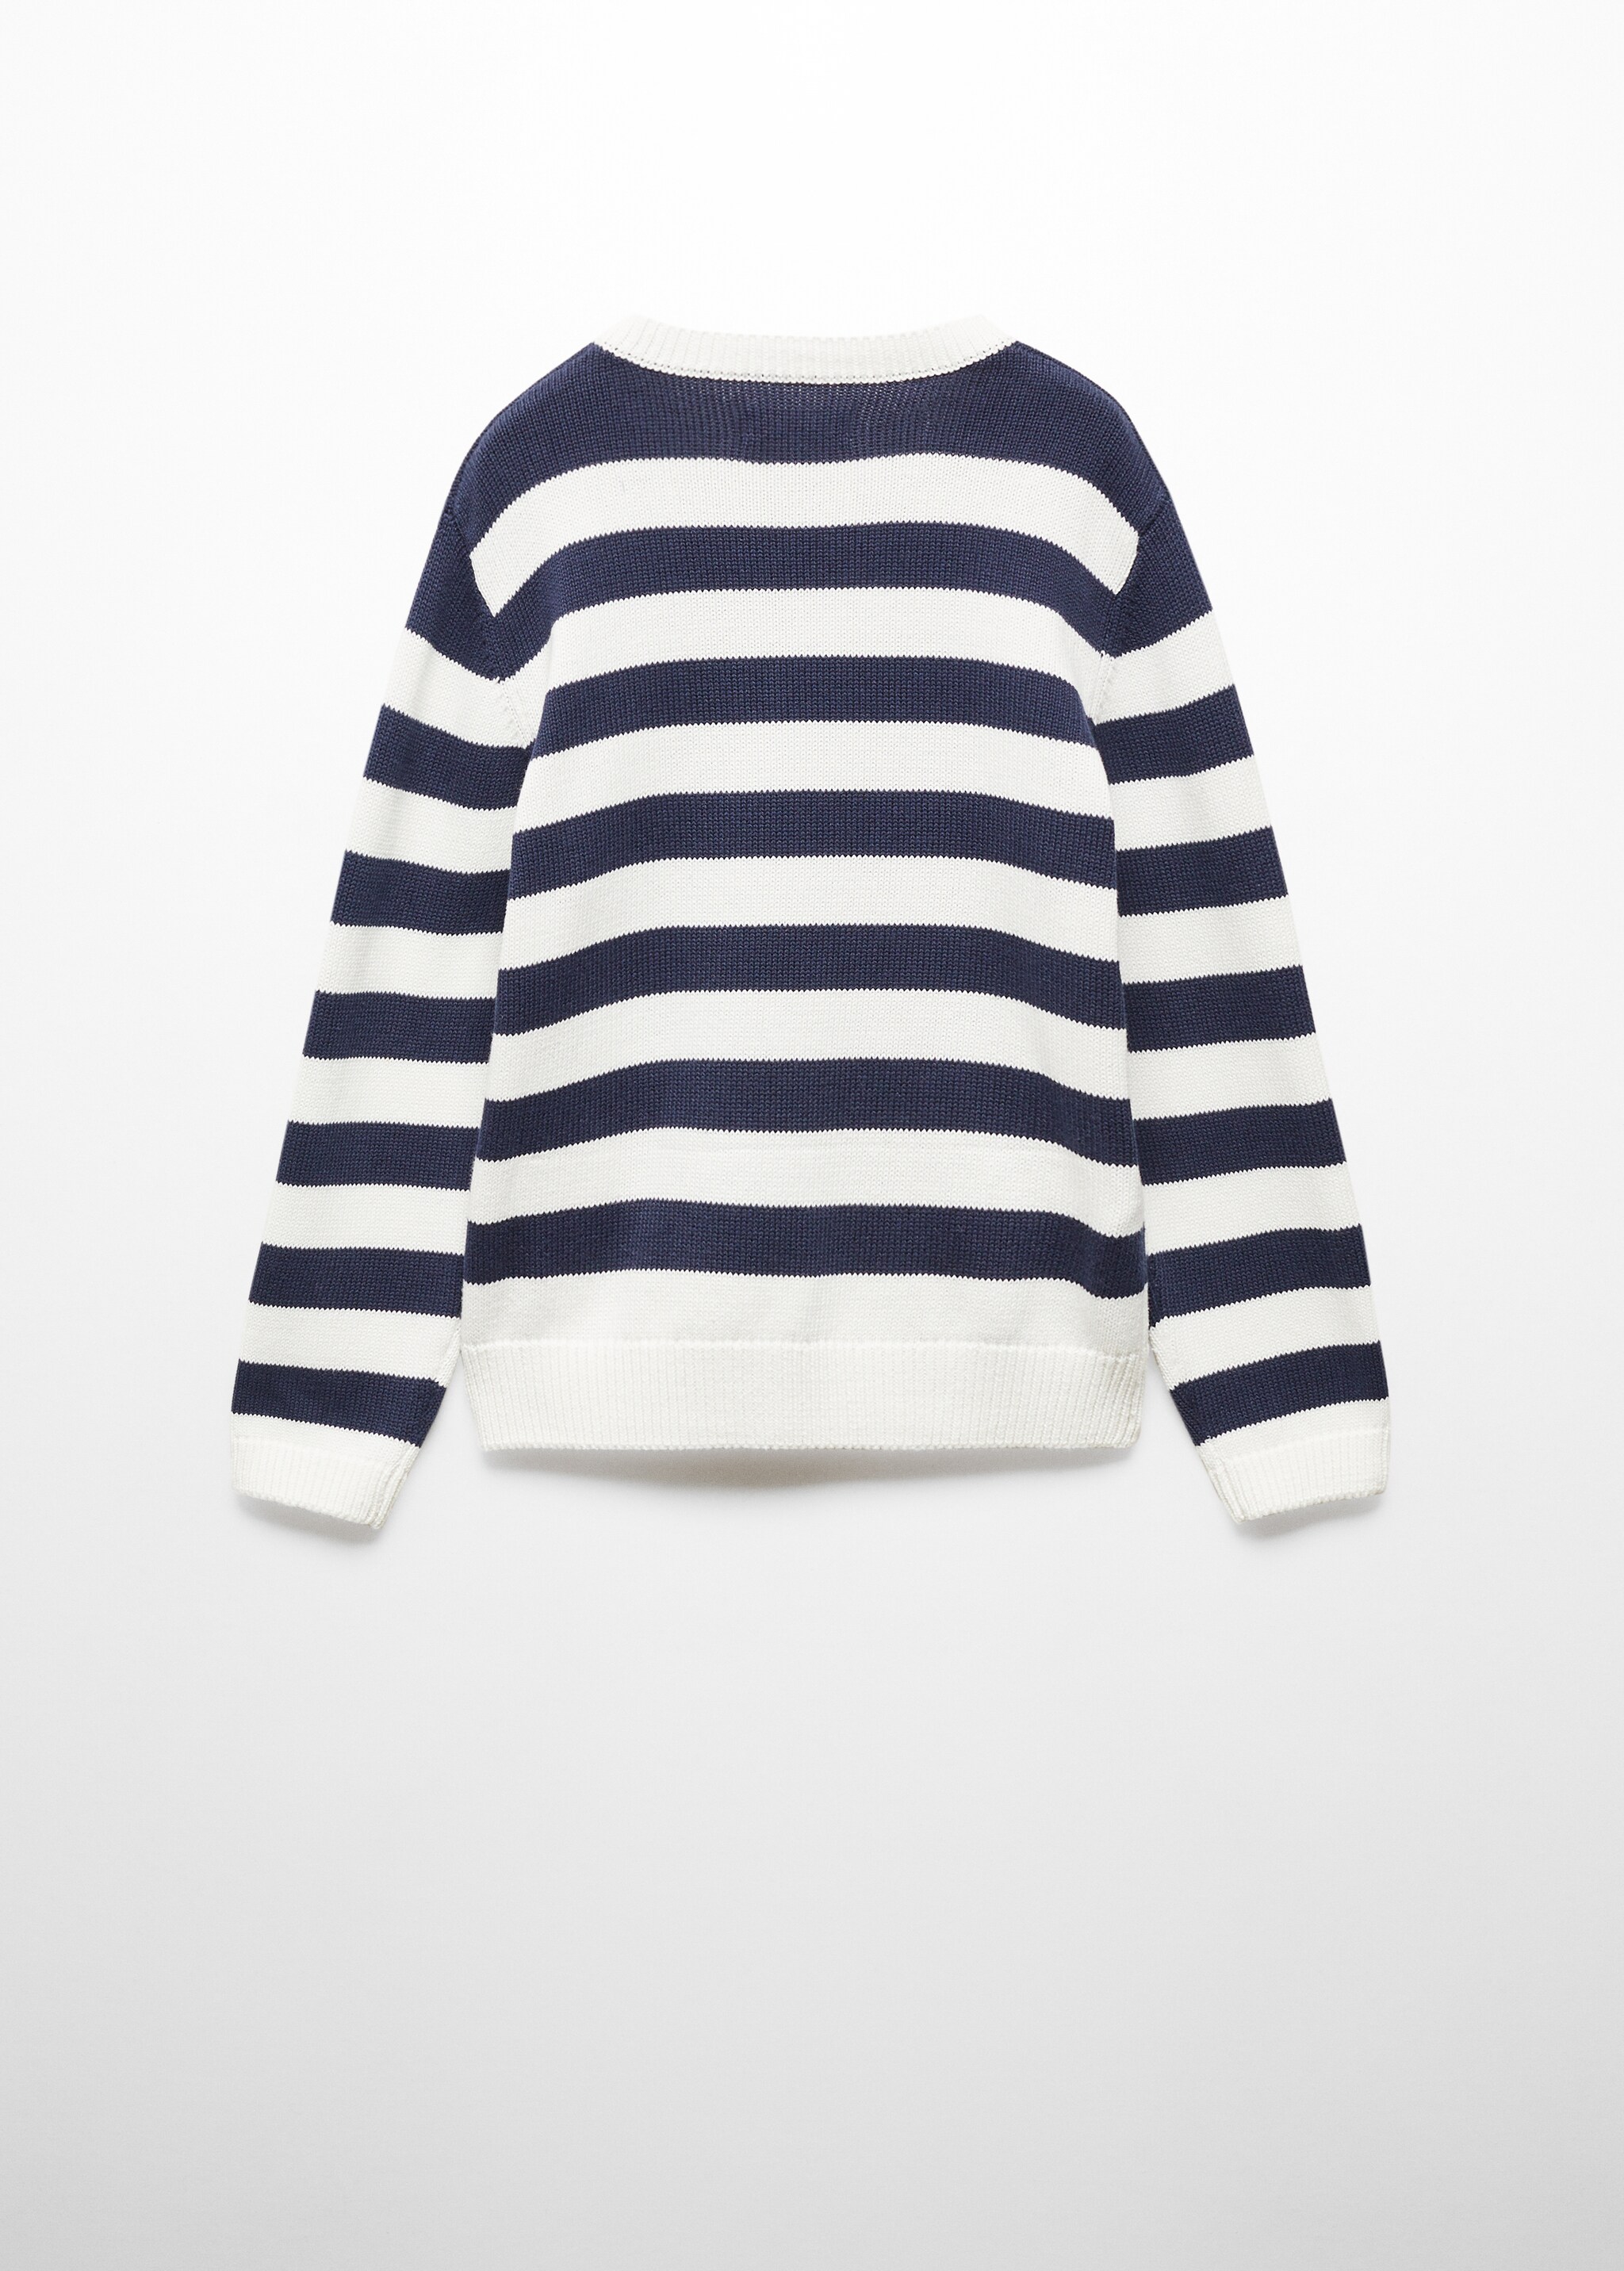 Knit striped sweater - الجهة الخلفية للمنتج